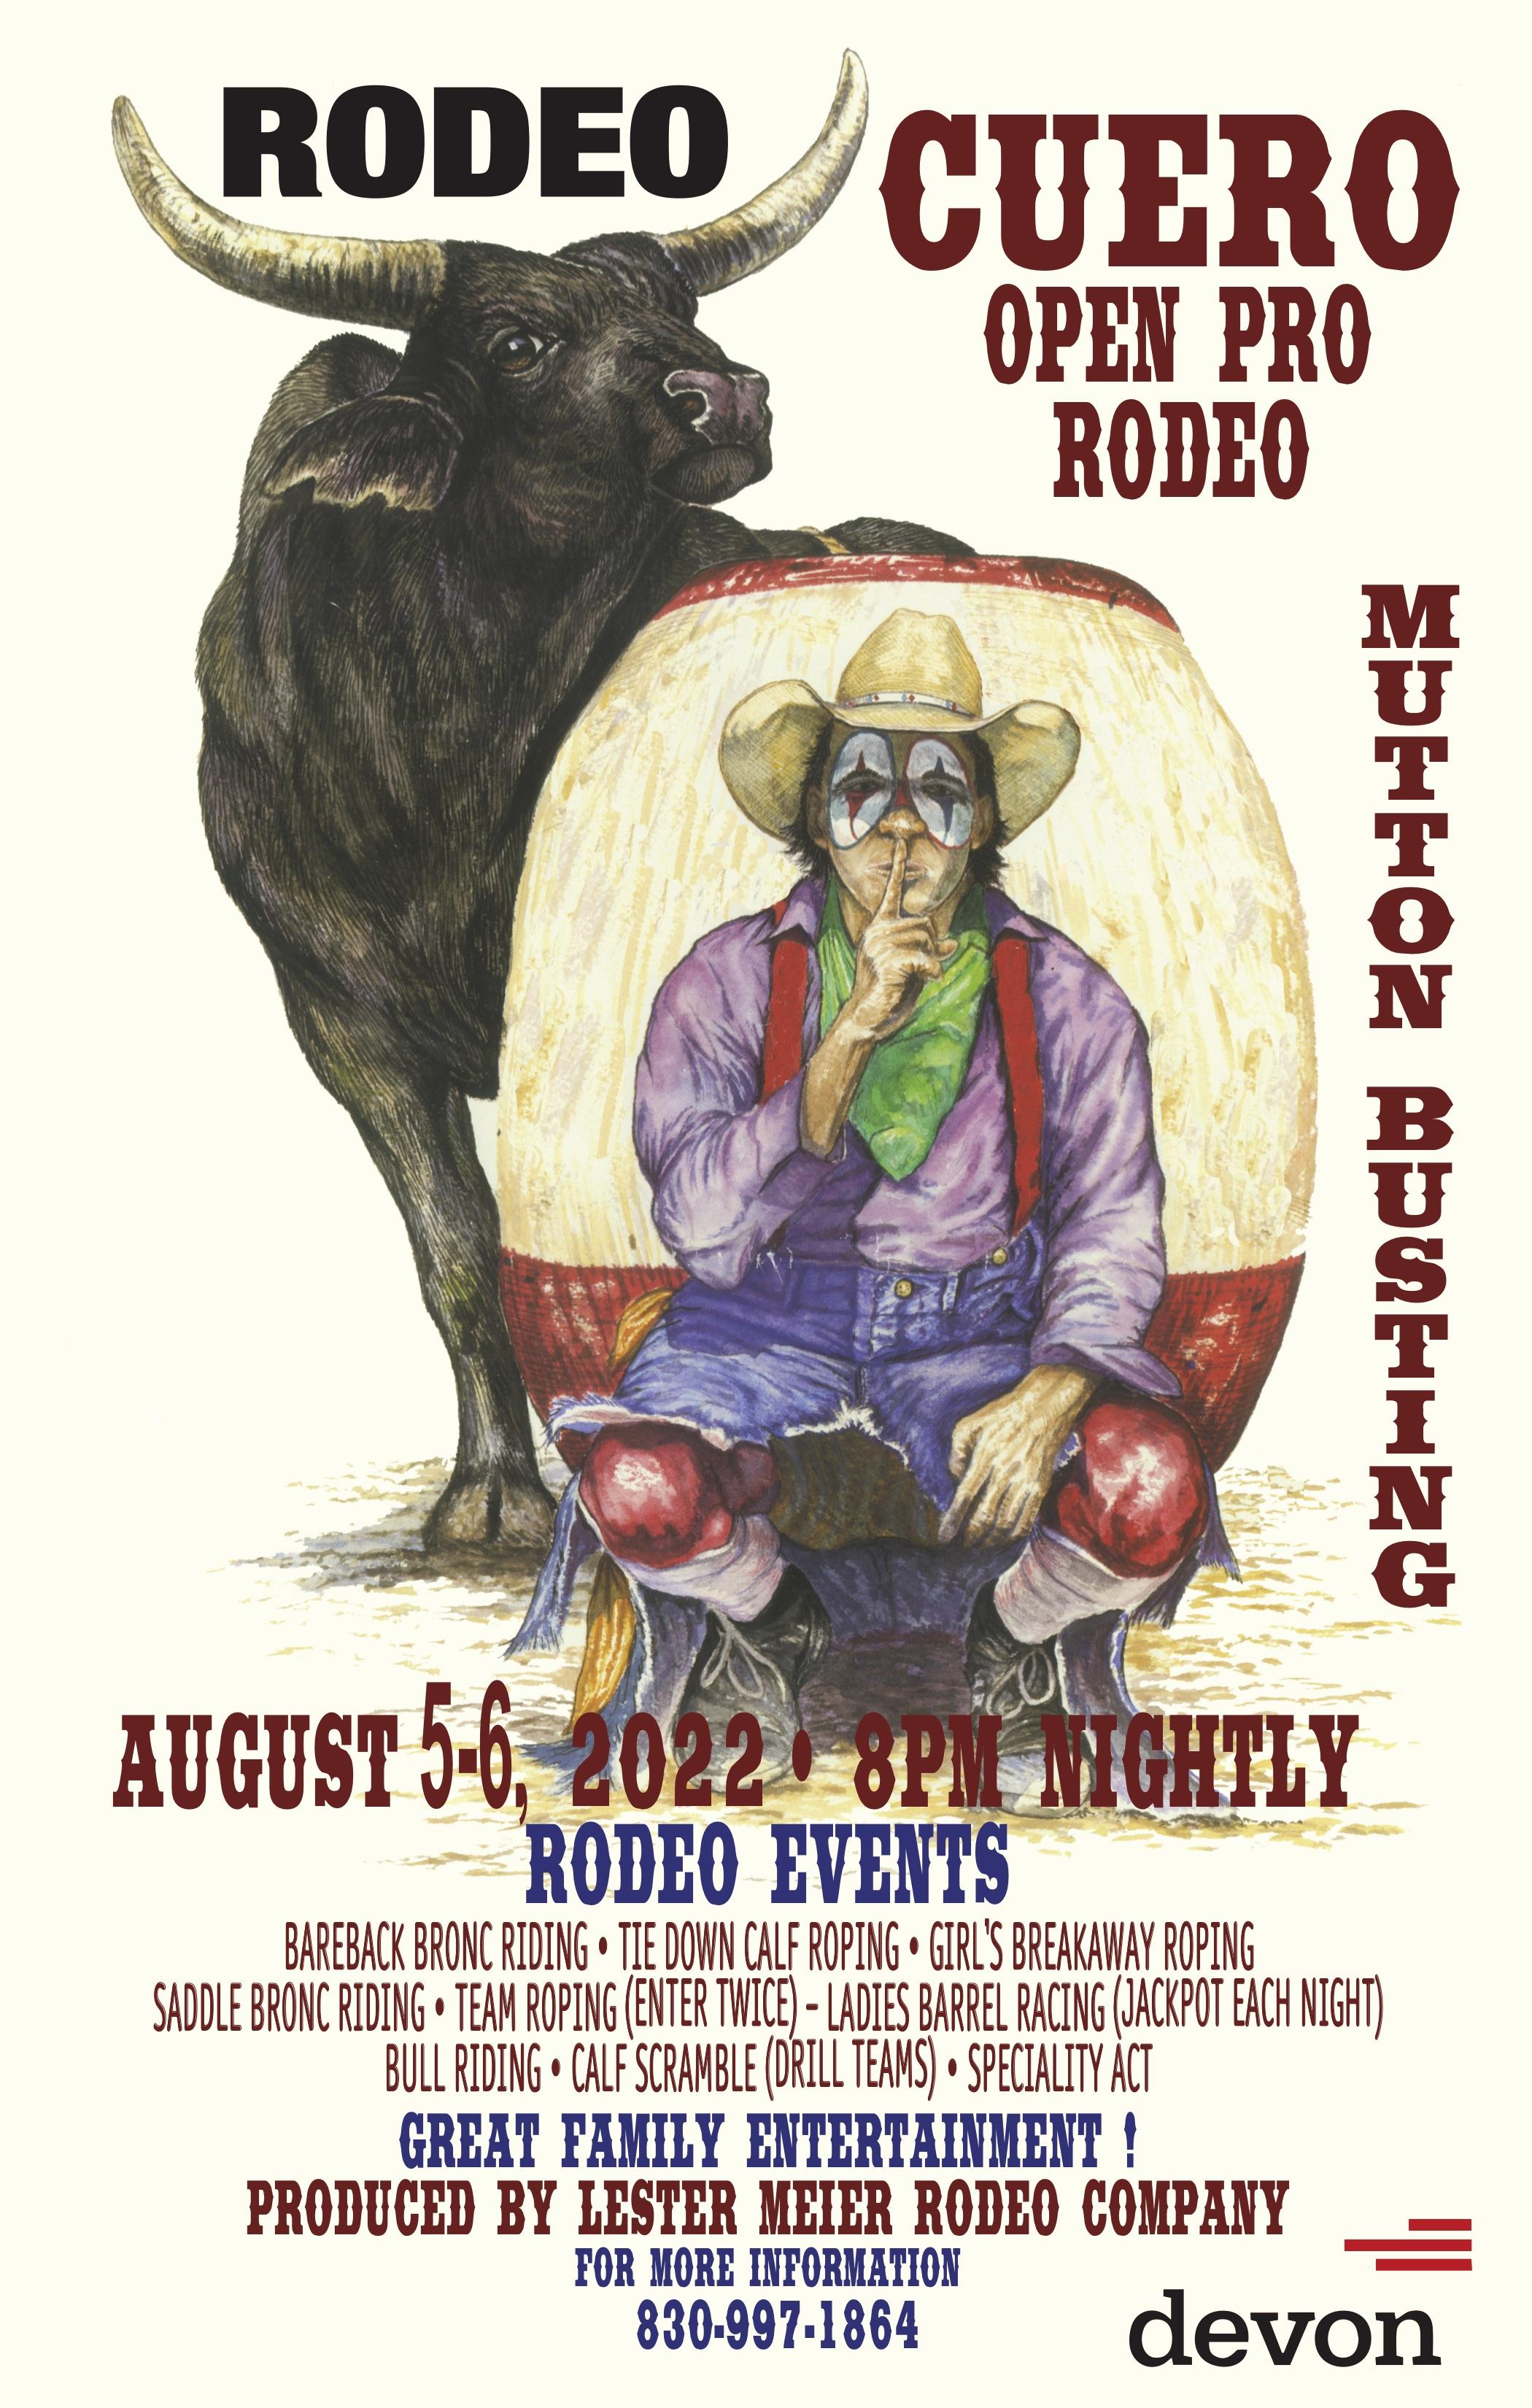 Lester Meier Rodeo Company 2022 Cuero Open Pro Rodeo DeWitt County Today